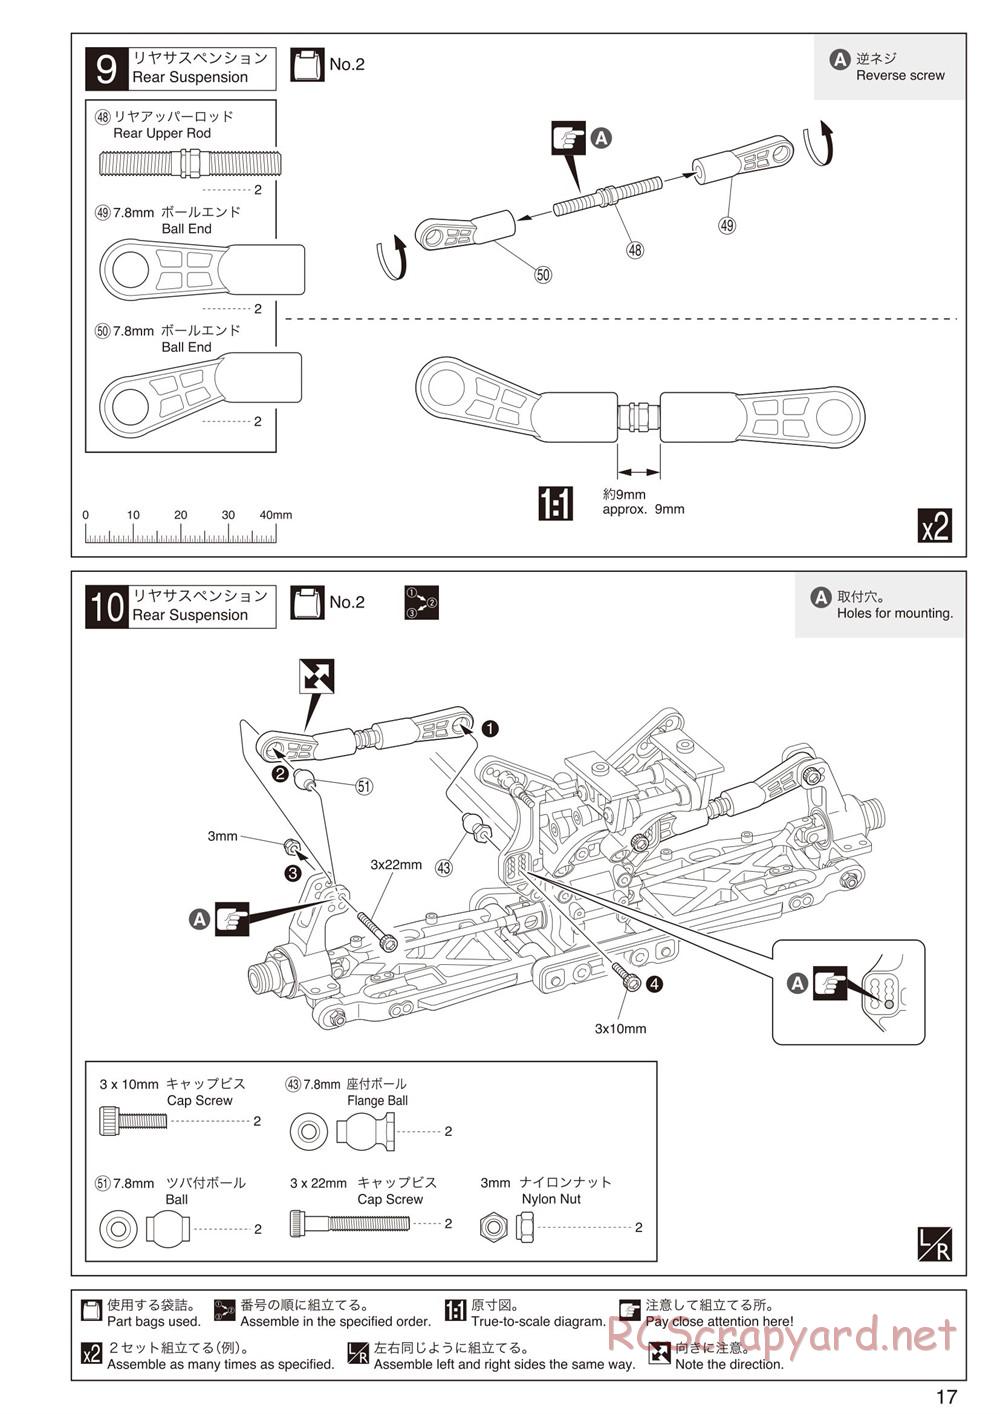 Kyosho - Inferno MP9 TKI2 - Manual - Page 17